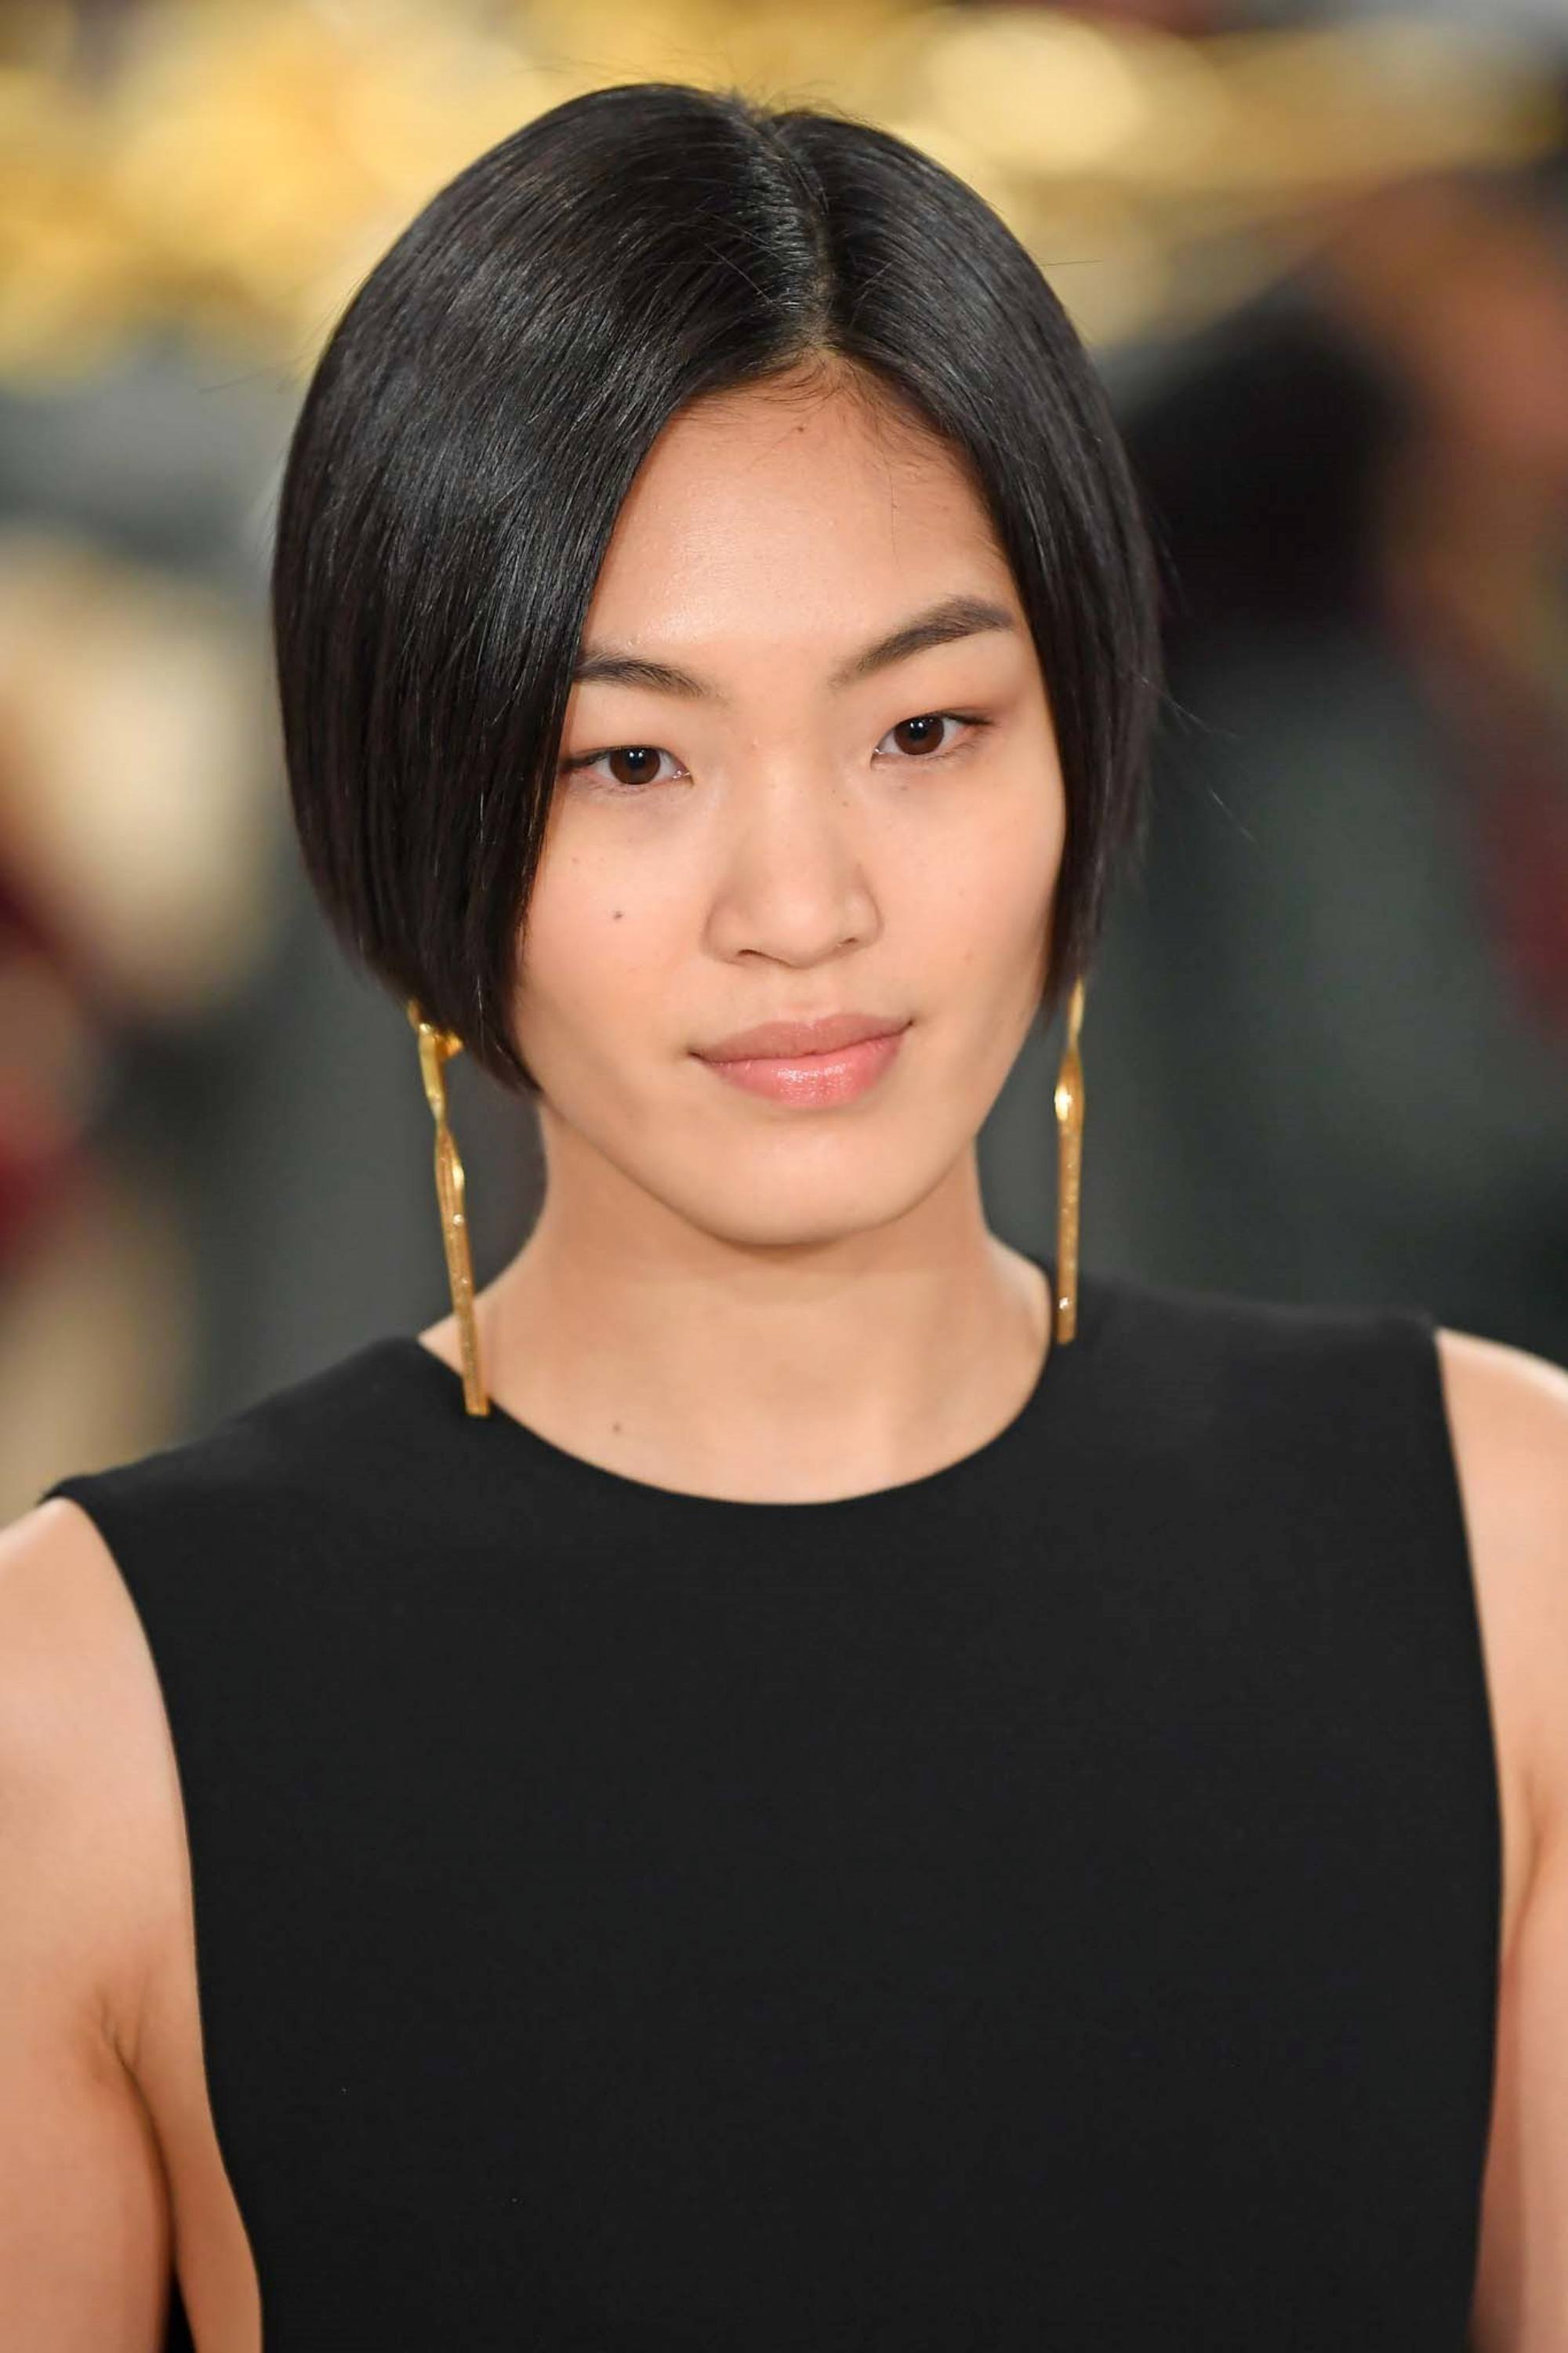 Straight bob: Closeup shot of an Asian woman with short black hair wearing a black dress